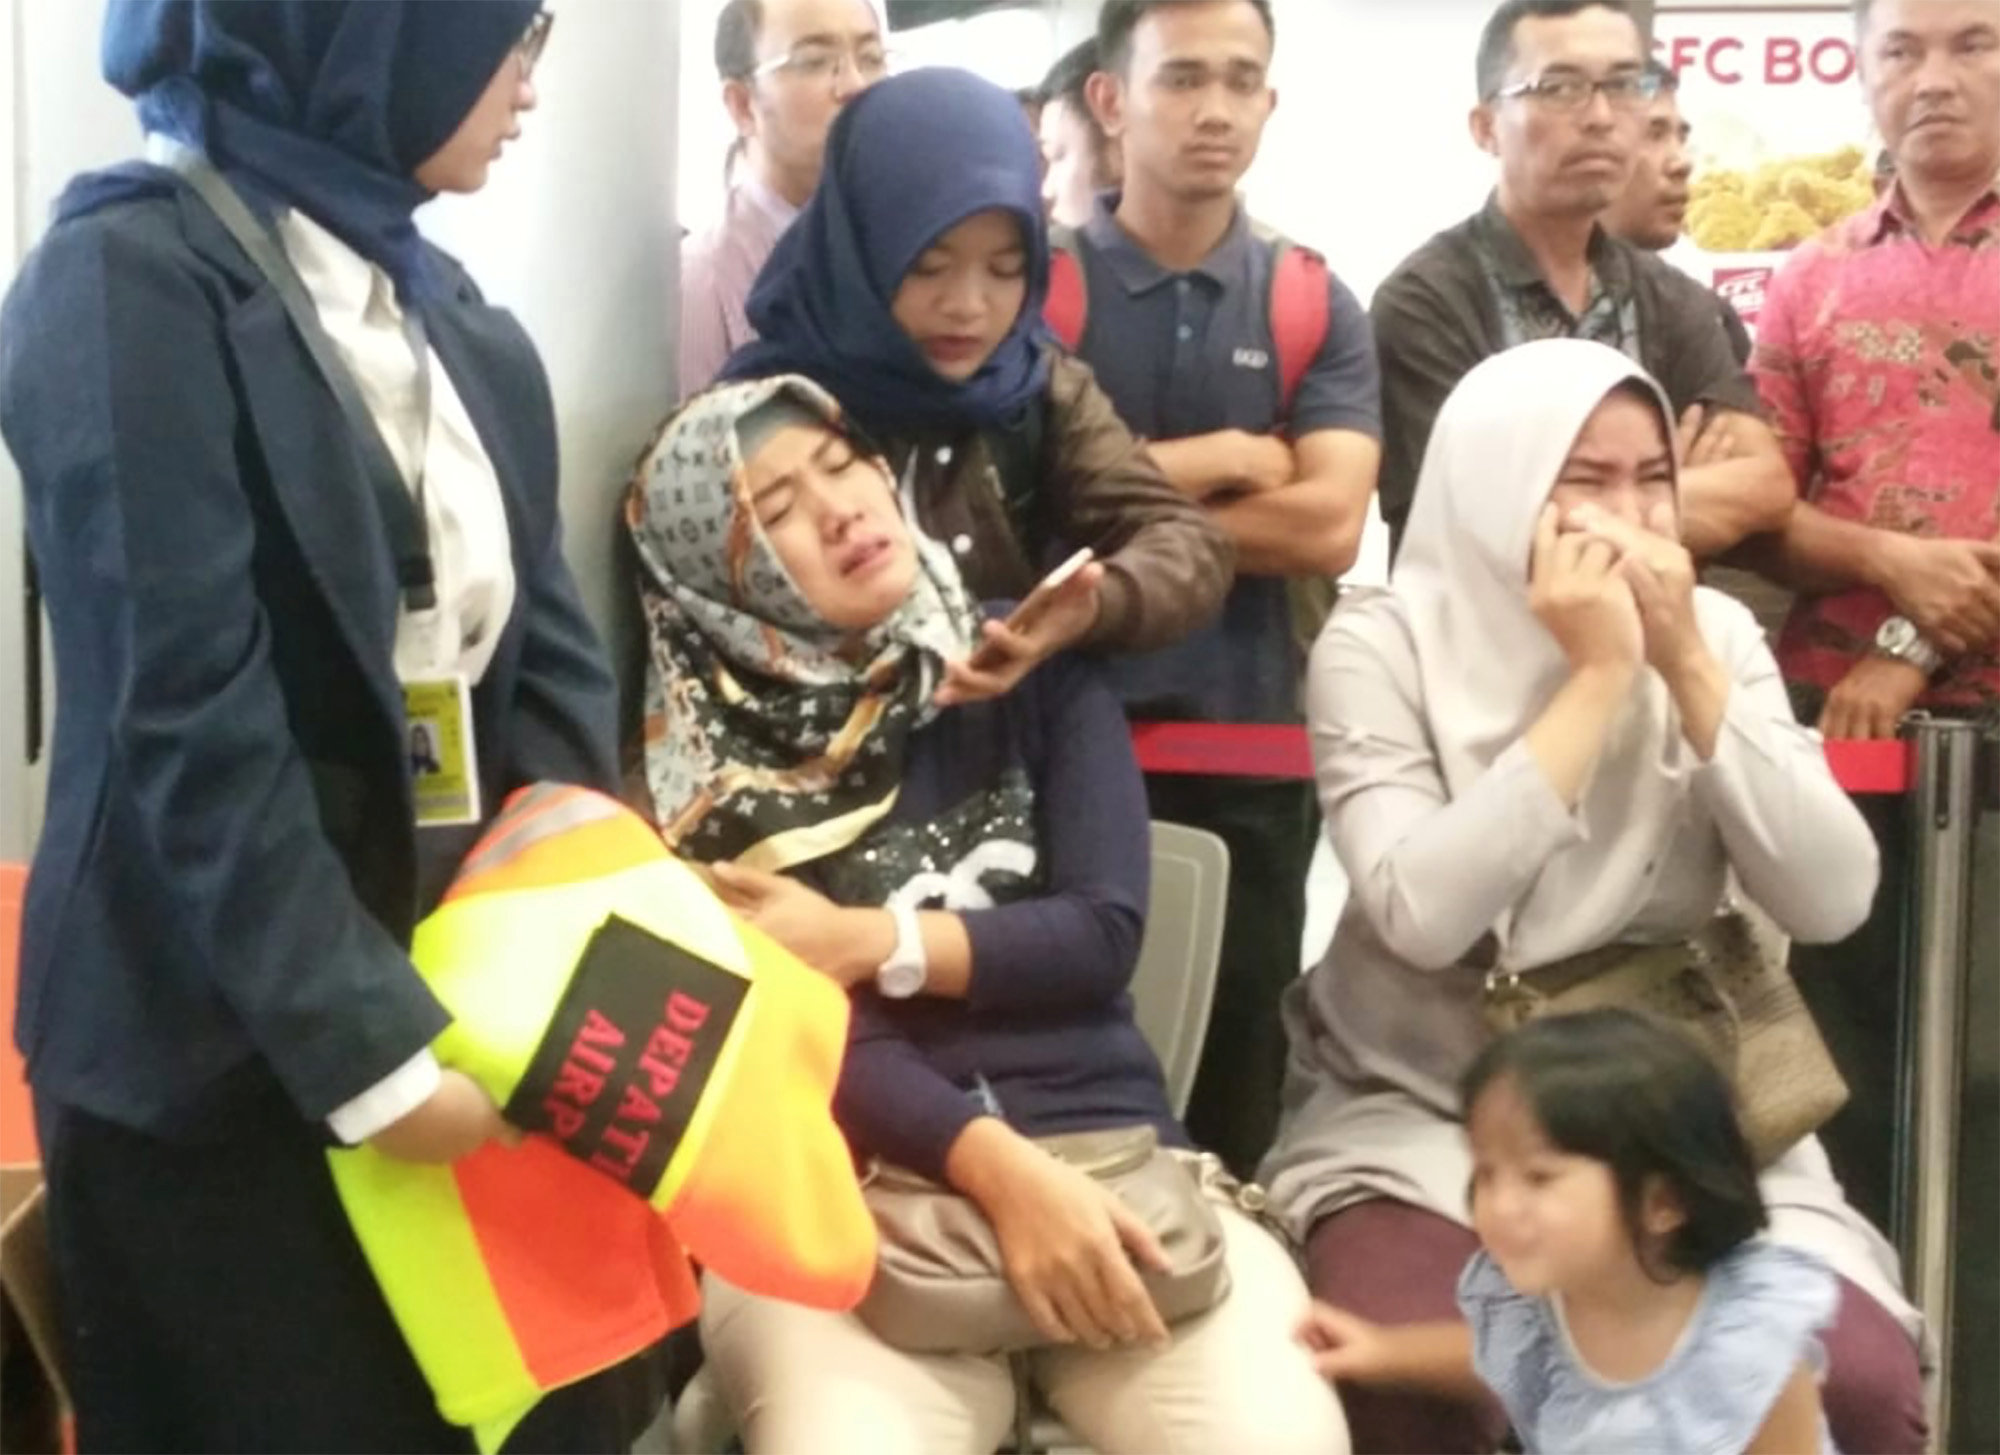 Relatives of passengers of Lion Air flight JT610 that crashed into the sea, cry at Depati Amir airport in Pangkal Pinang, Indonesia, October 29, 2018. Antara Foto/Elza Elvia via REUTERS